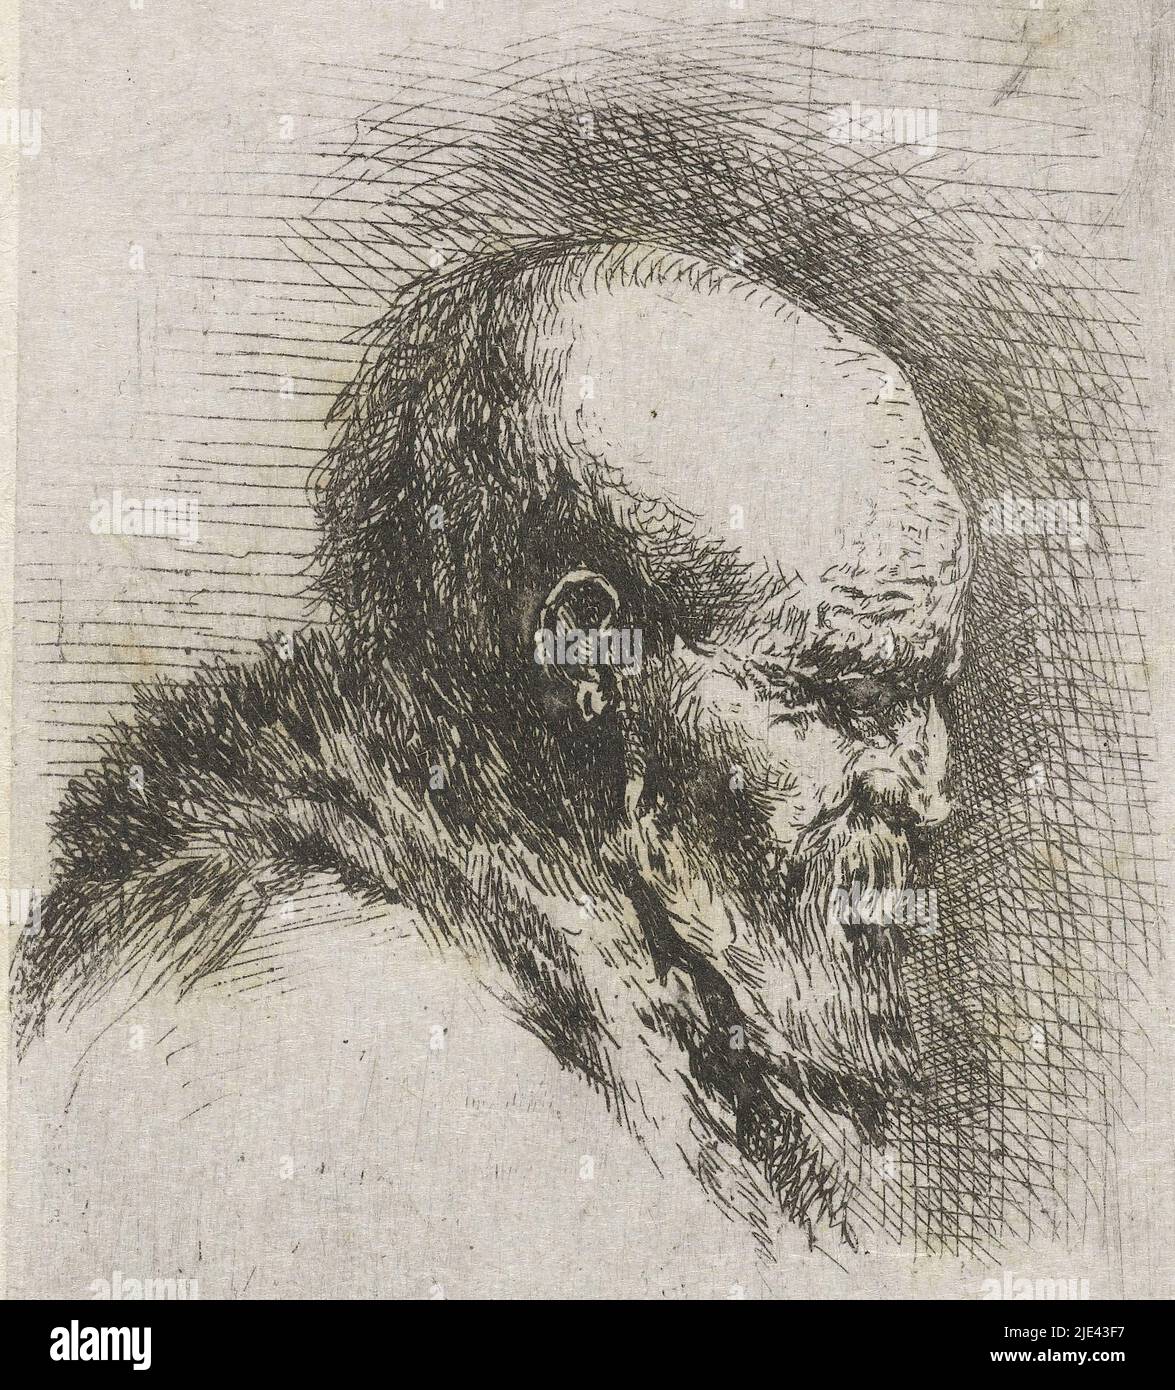 Portrait of an old man, Cornelis Justinus Geisweit van der Netten, 1858, An old bald man with a beard. Bust en profil to the right., print maker: Cornelis Justinus Geisweit van der Netten, (mentioned on object), Netherlands, 1858, paper, etching, h 72 mm - w 51 mm Stock Photo